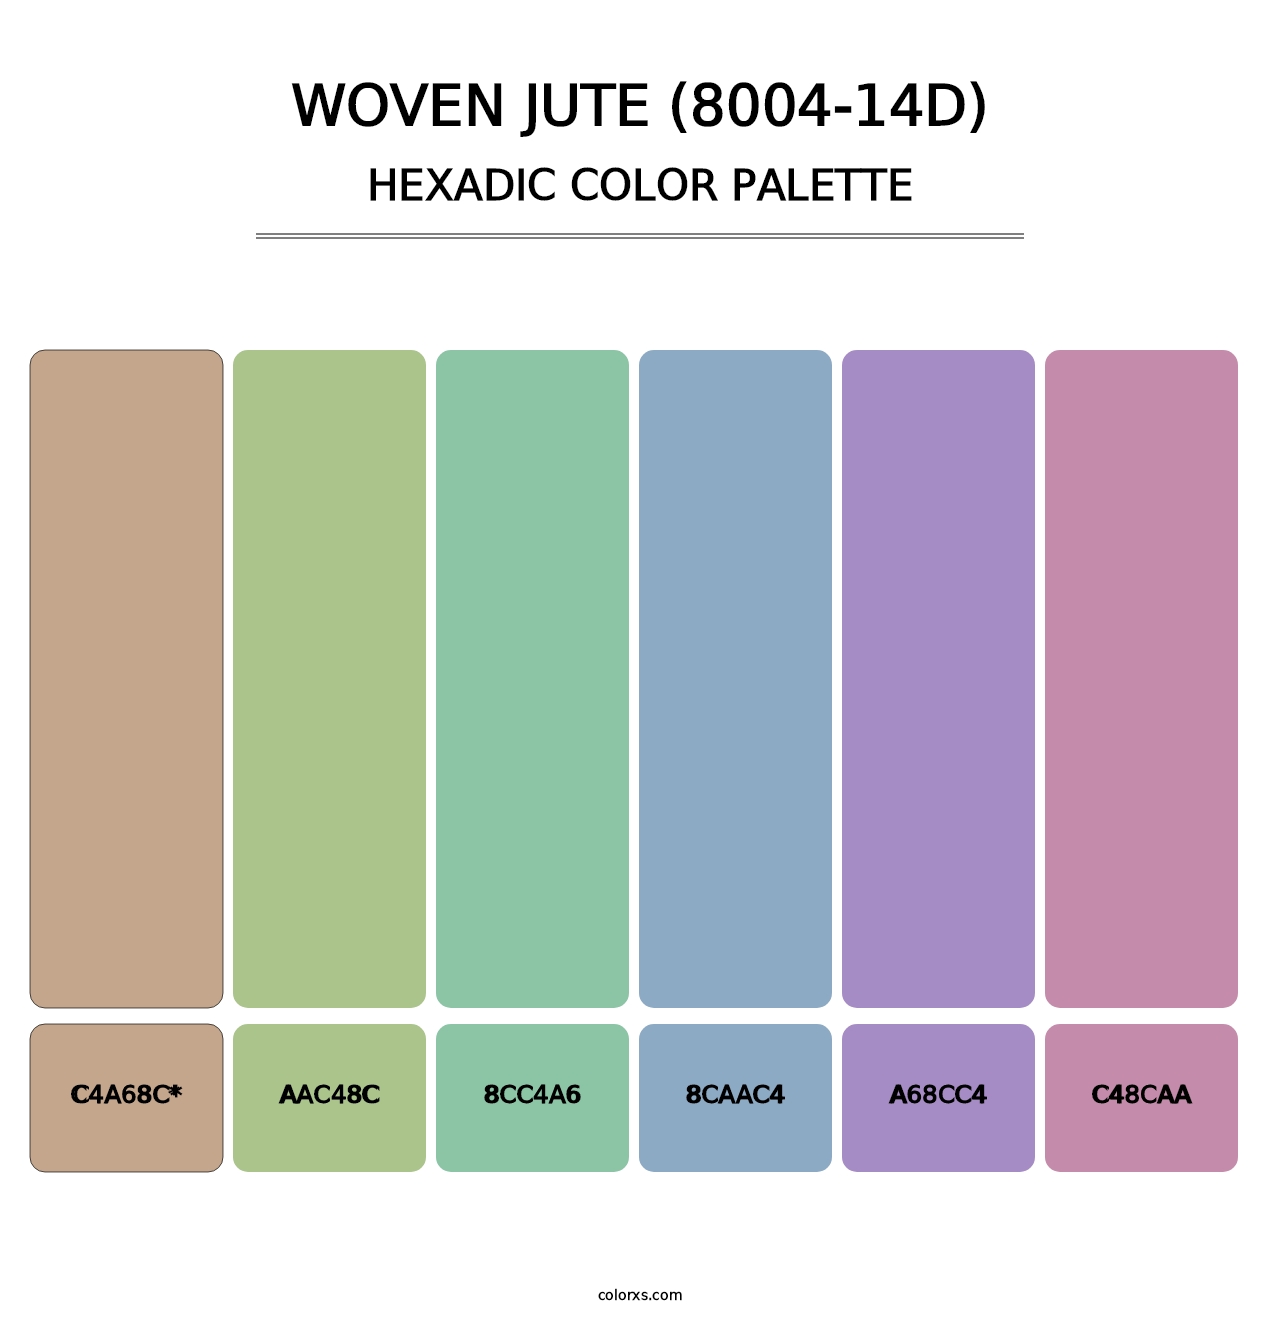 Woven Jute (8004-14D) - Hexadic Color Palette